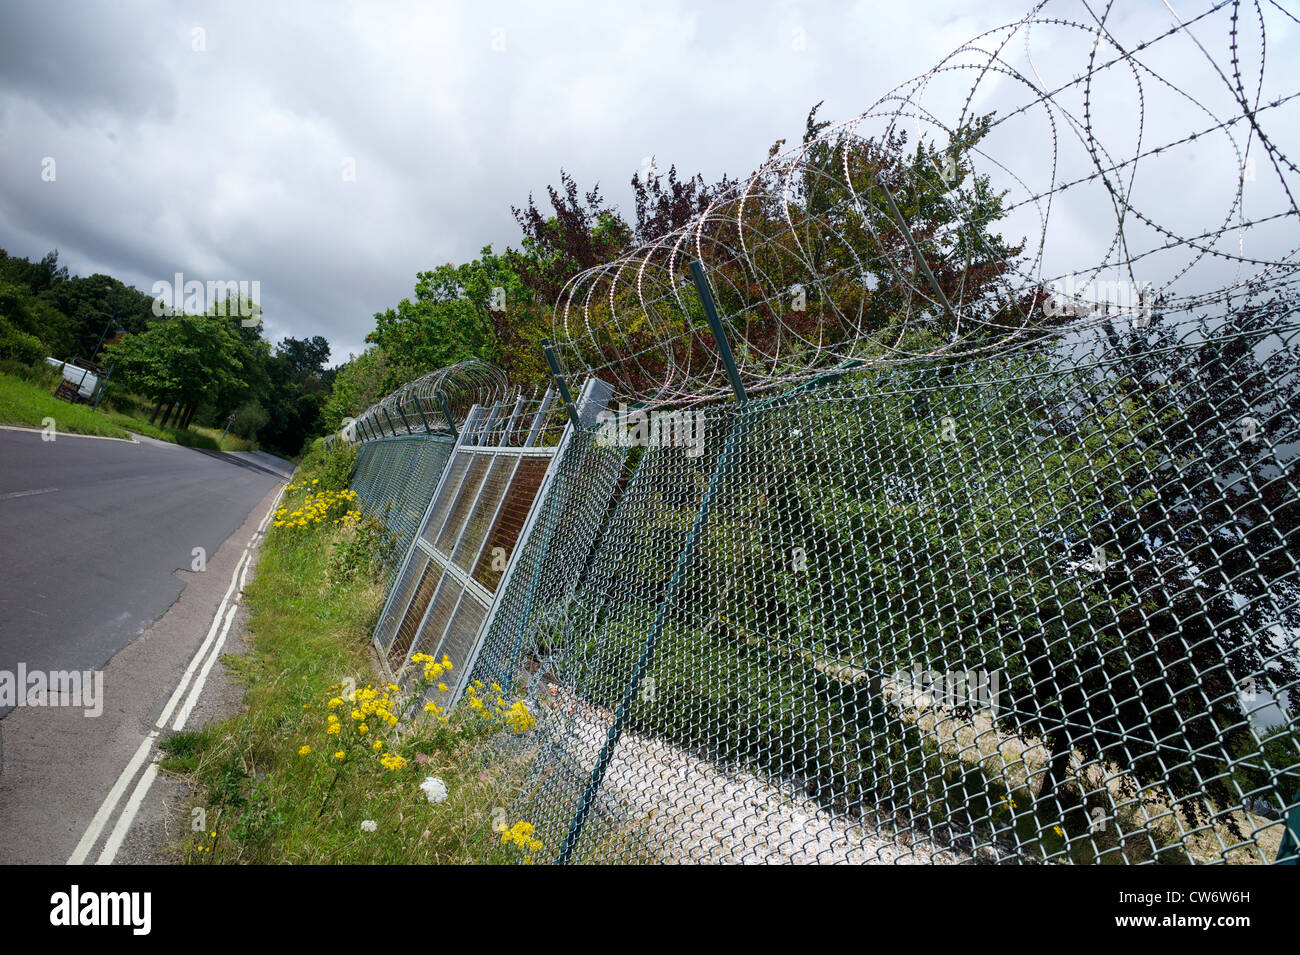 Fence and razor wire, UK Stock Photo